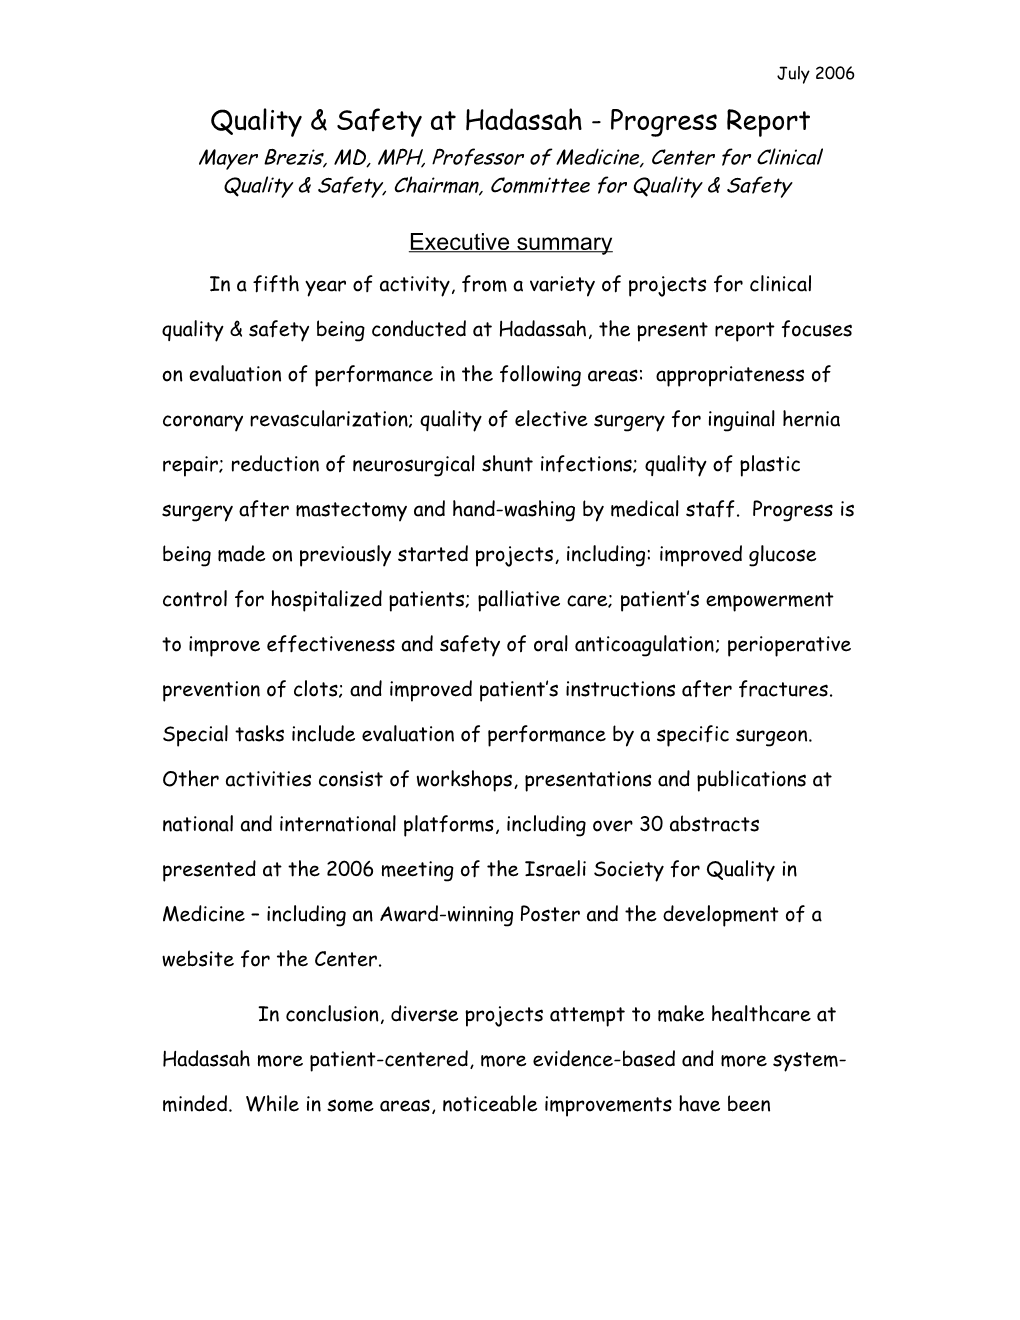 Proposal for Hadassah-Hebrew University Center for Evidence Based Practice (EBP)